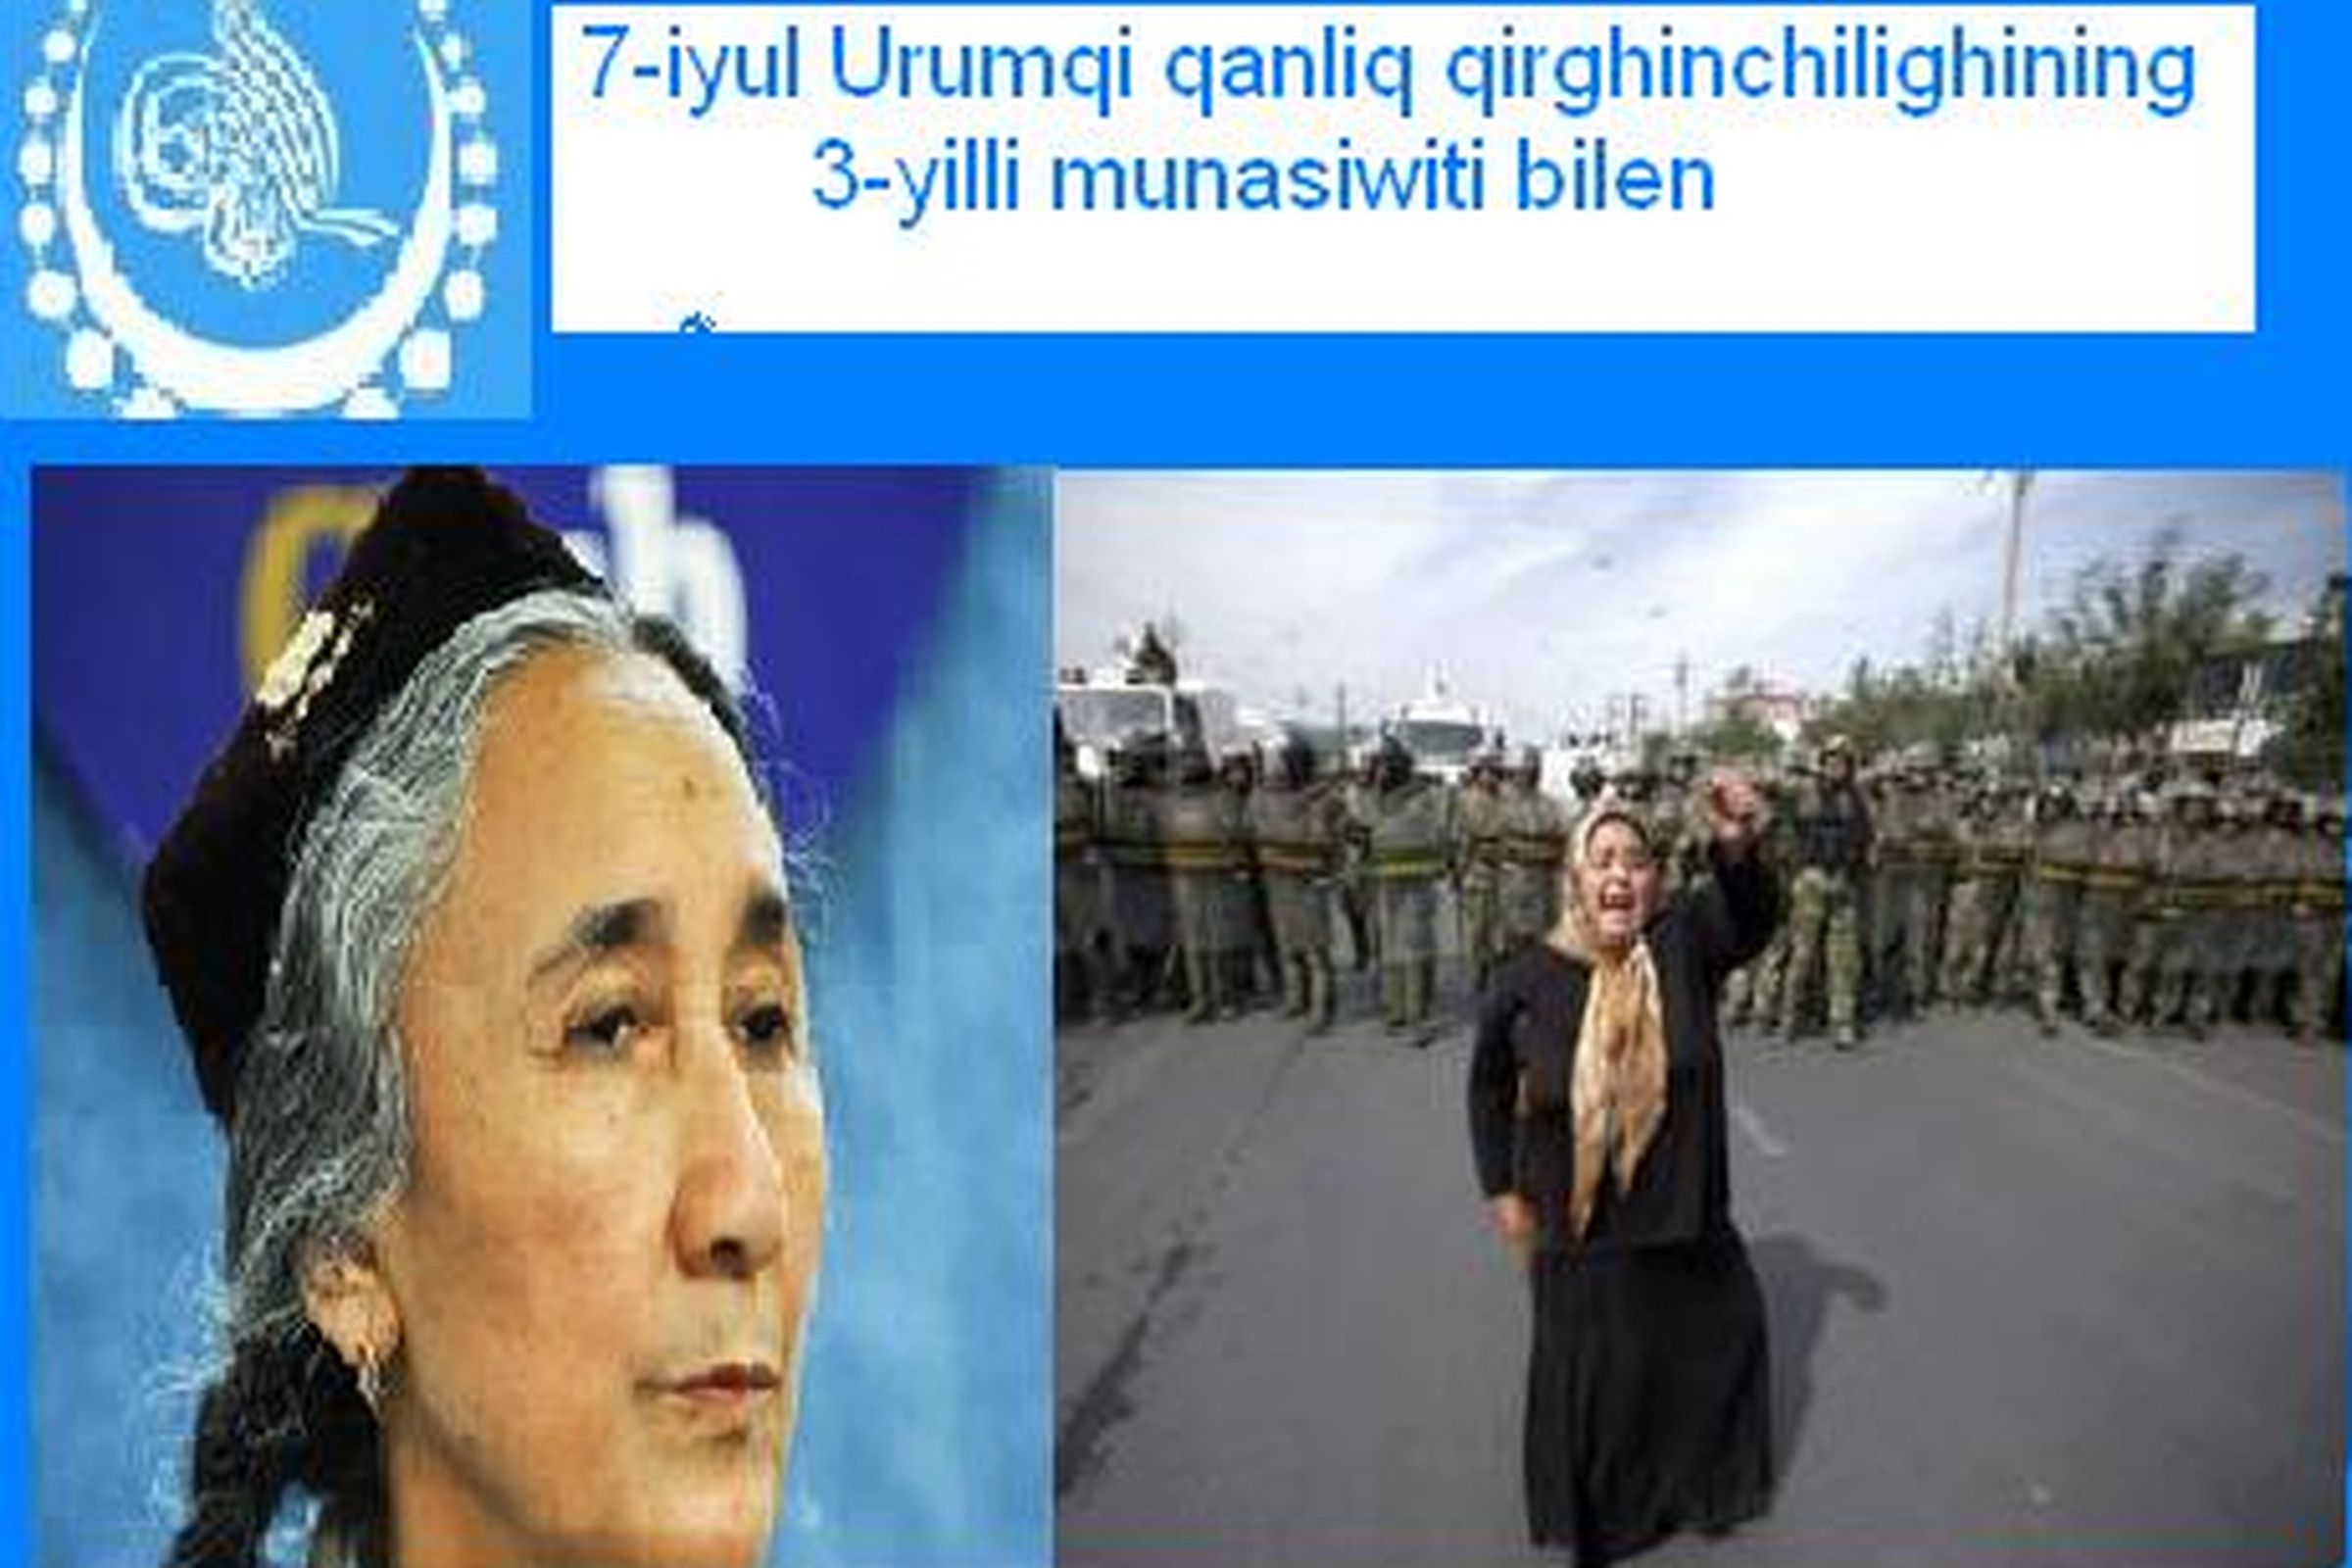 Uyghur malware target image